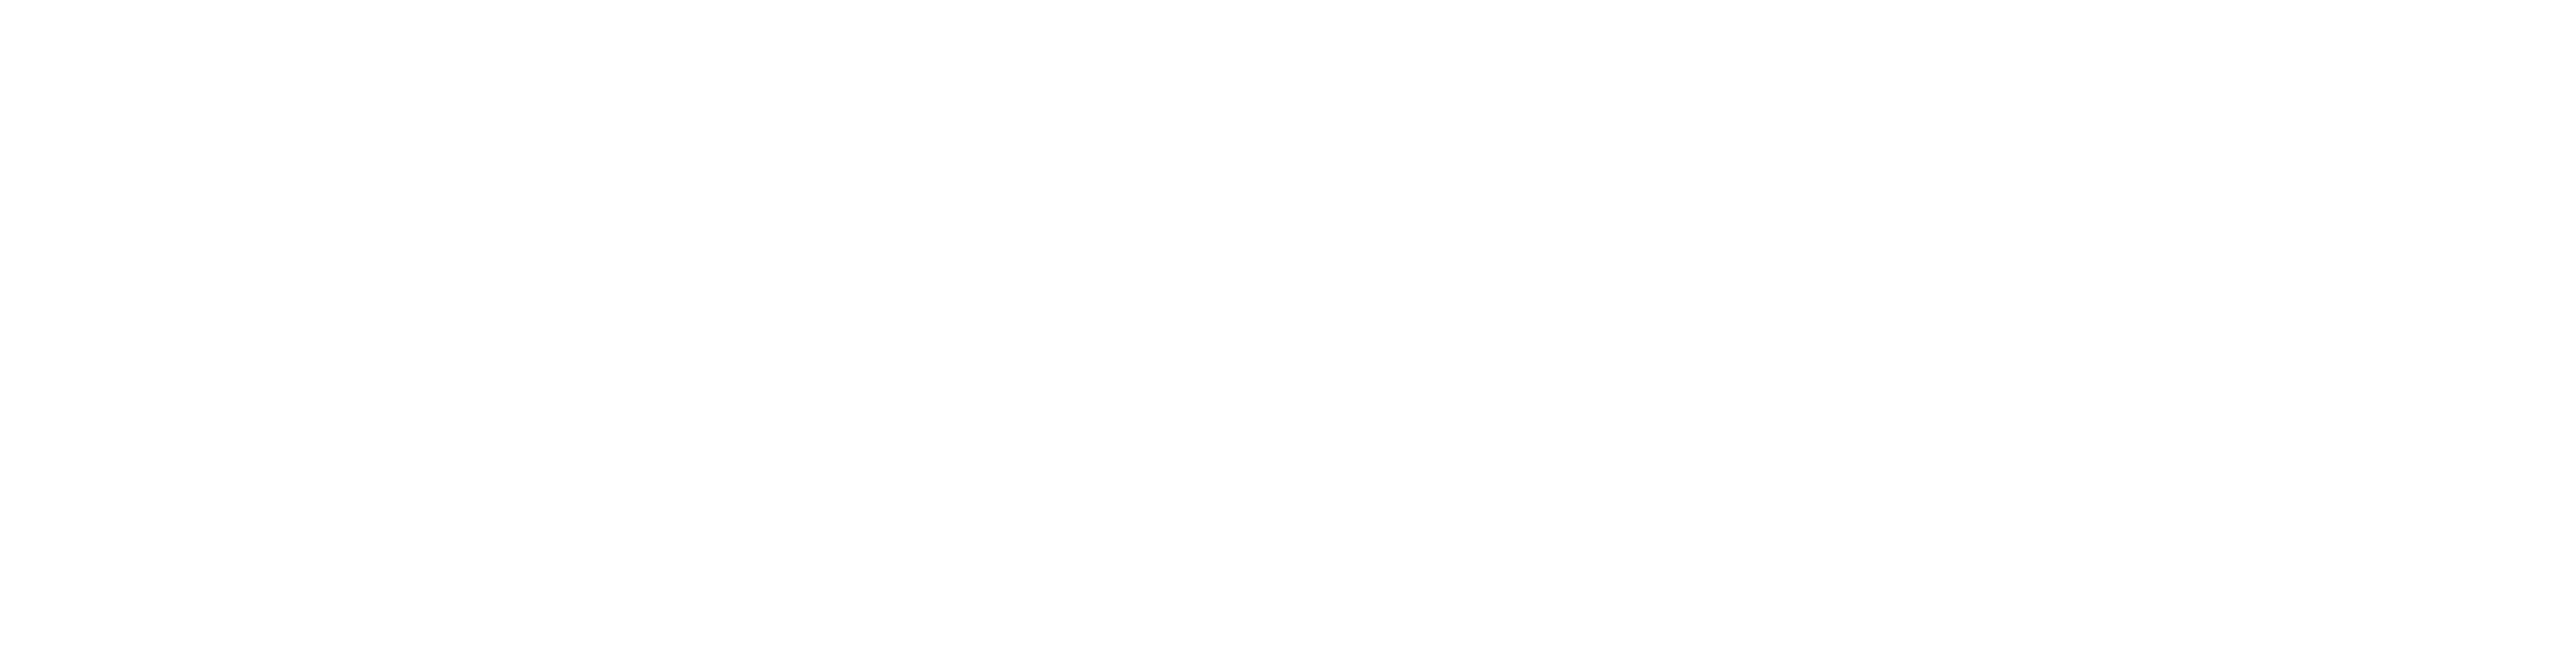 EarthSpirit_Logo_1vit_8inchwide3